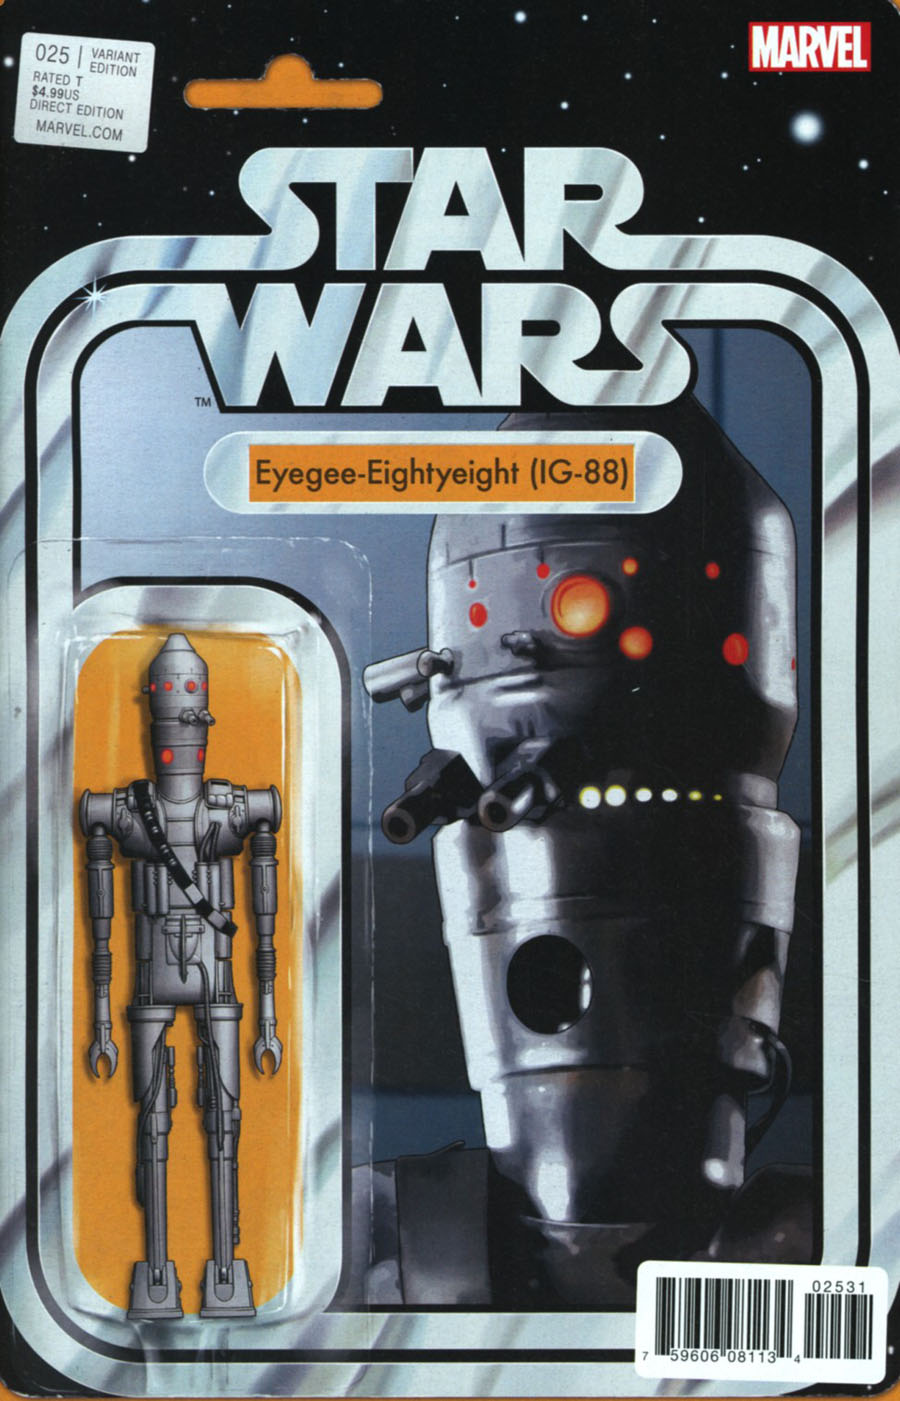 Star Wars Vol 4 #25 Cover B Variant John Tyler Christopher IG-88 Action Figure Cover